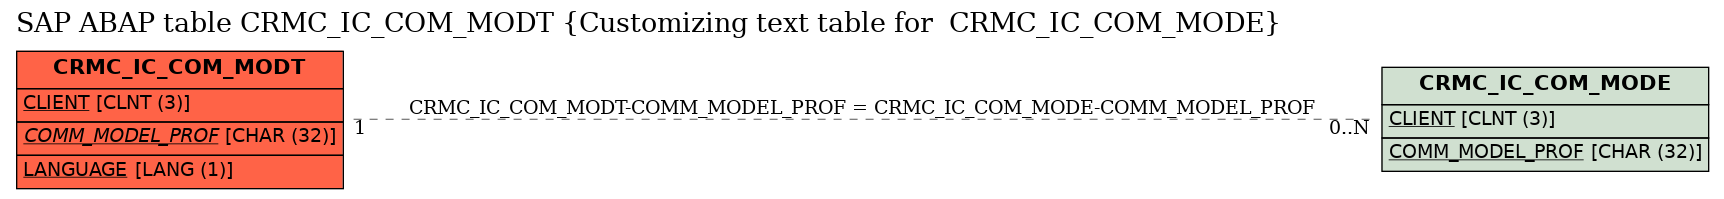 E-R Diagram for table CRMC_IC_COM_MODT (Customizing text table for  CRMC_IC_COM_MODE)